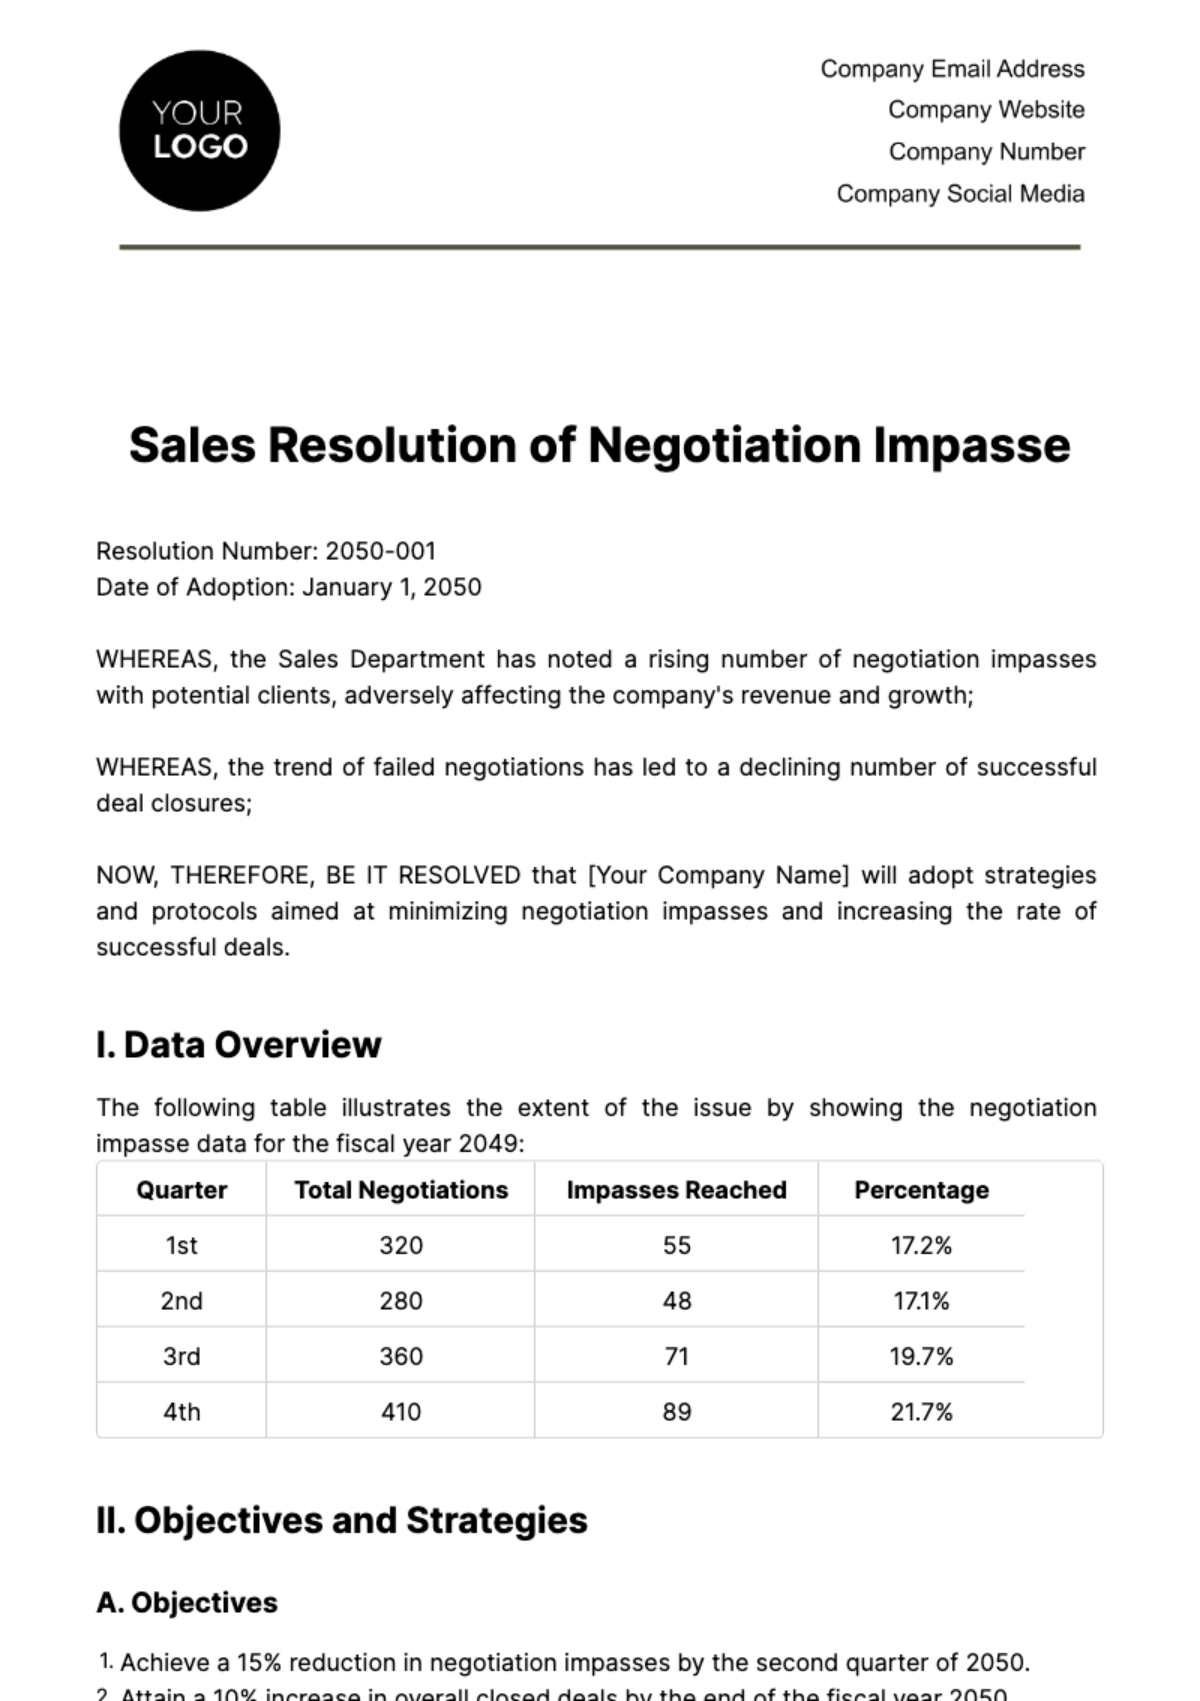 Sales Resolution of Negotiation Impasse Template